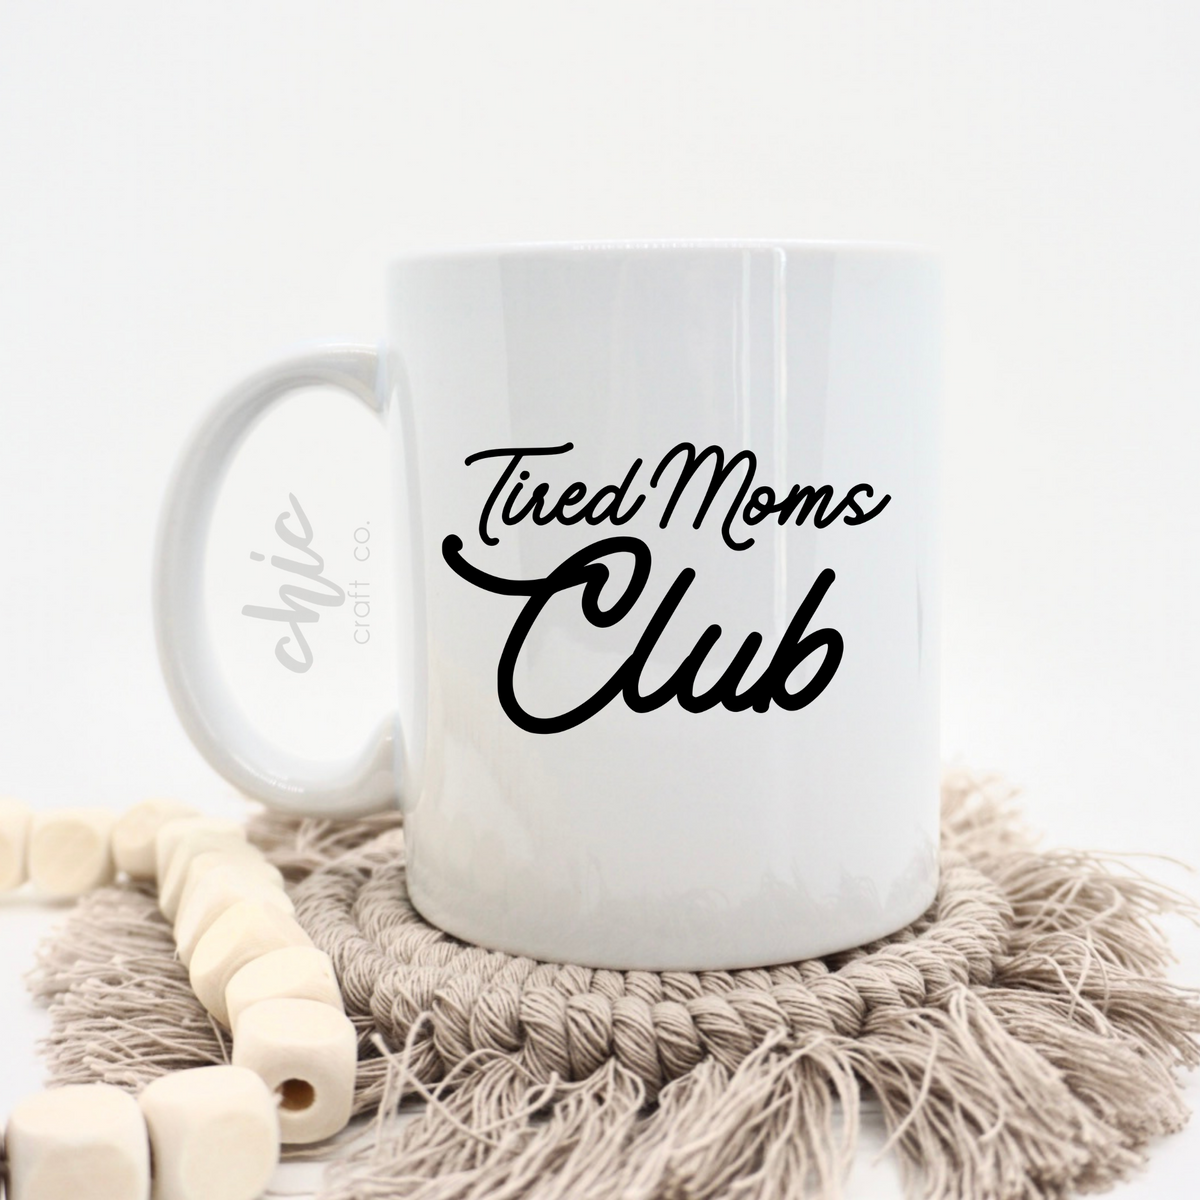 Tired Moms Club Coffee Mug or Tumbler